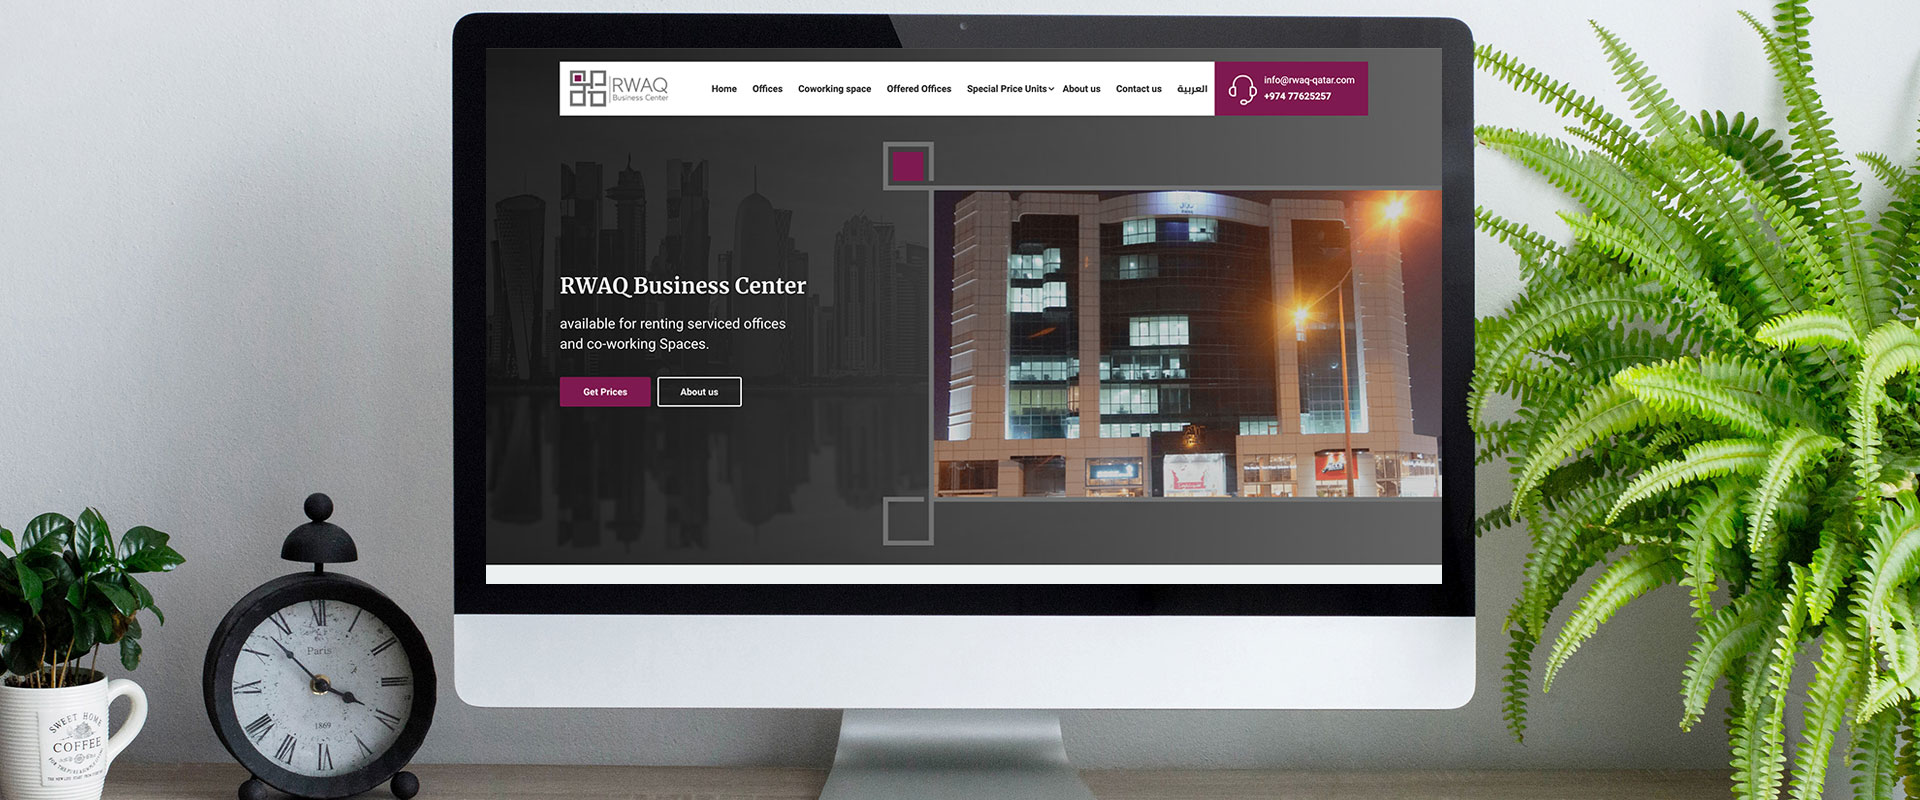 Rwaq Business Center Qatar